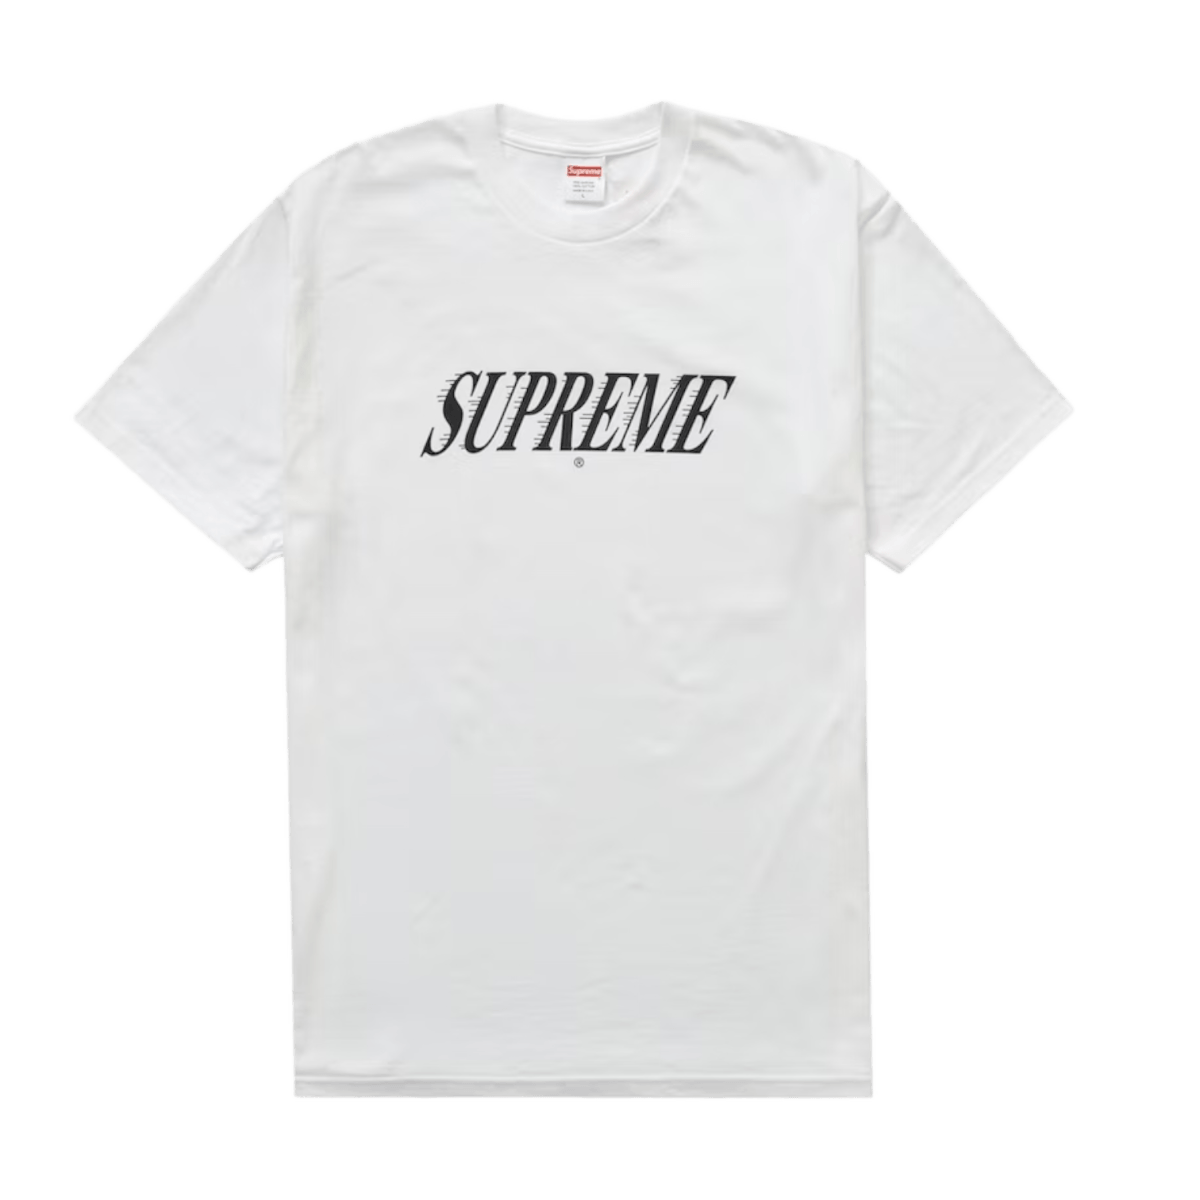 Supreme Slap Shot White T Shirt - T-Shirt - Supreme - Jawns on Fire